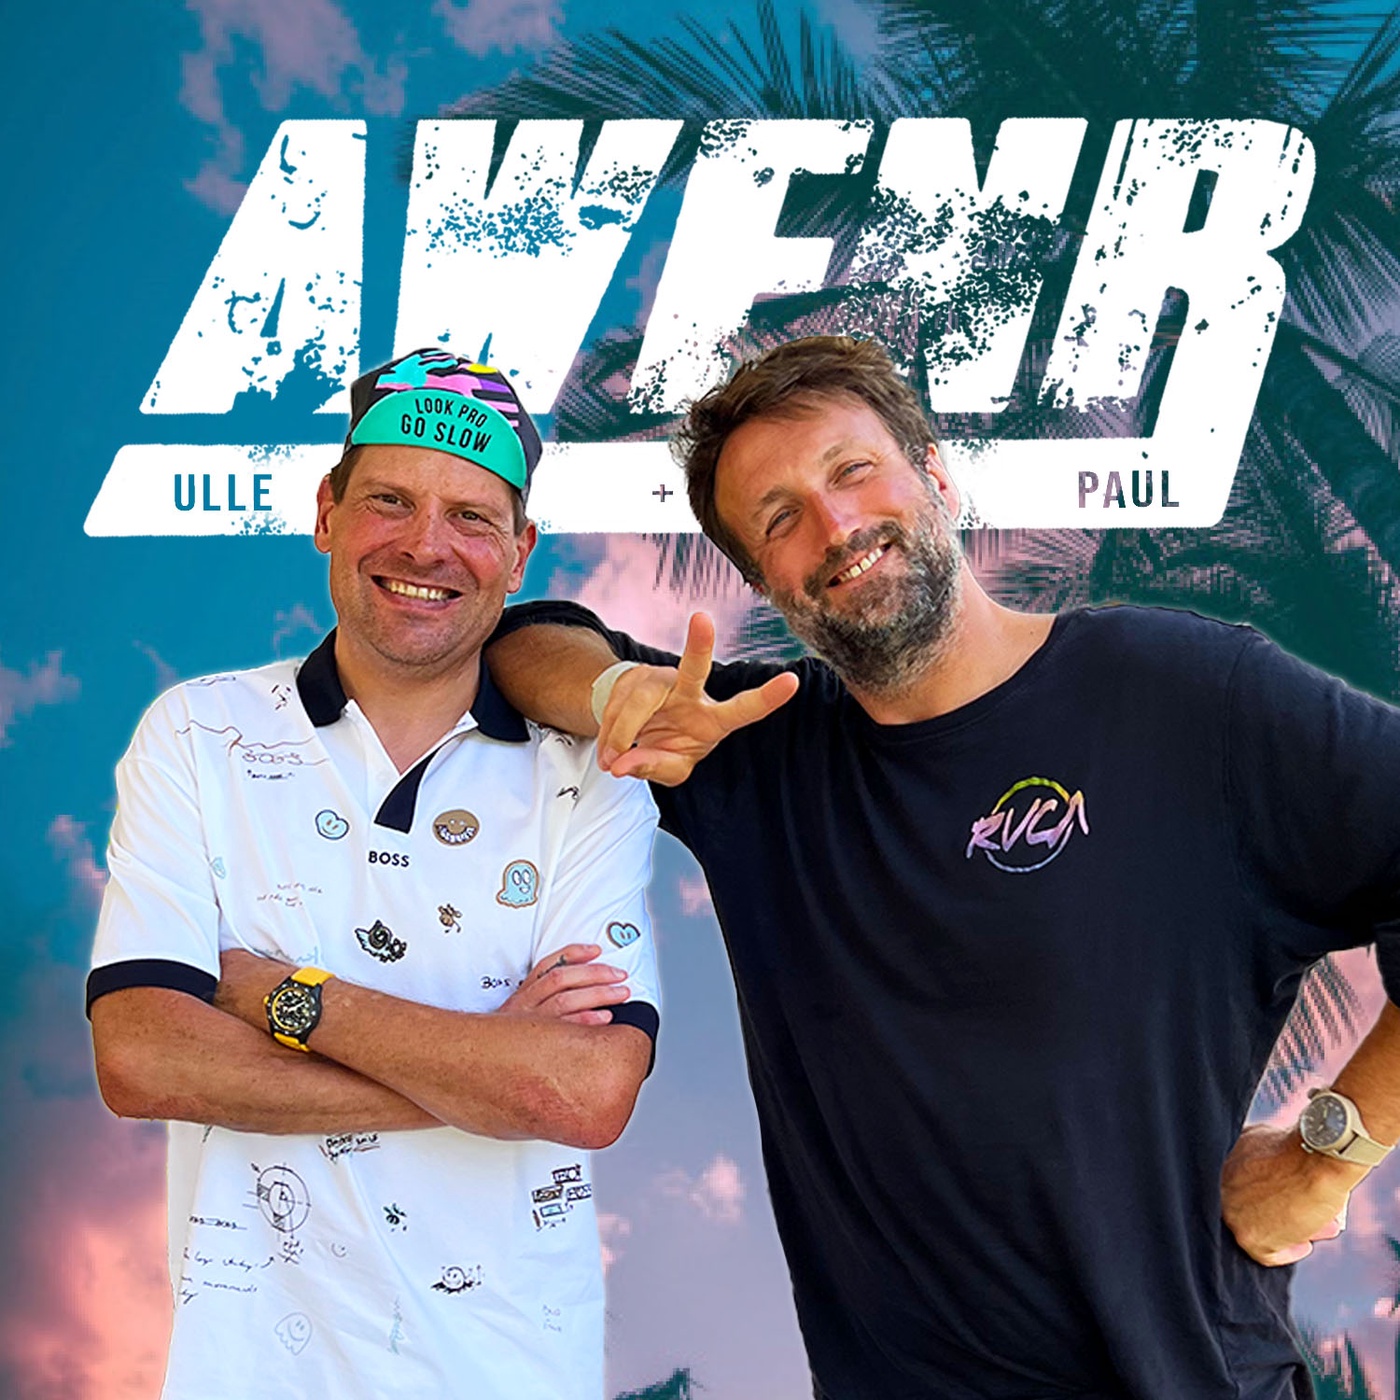 AWFNR #450 - JAN ULLRICH & PAUL - Vom Beruf zum Hobby